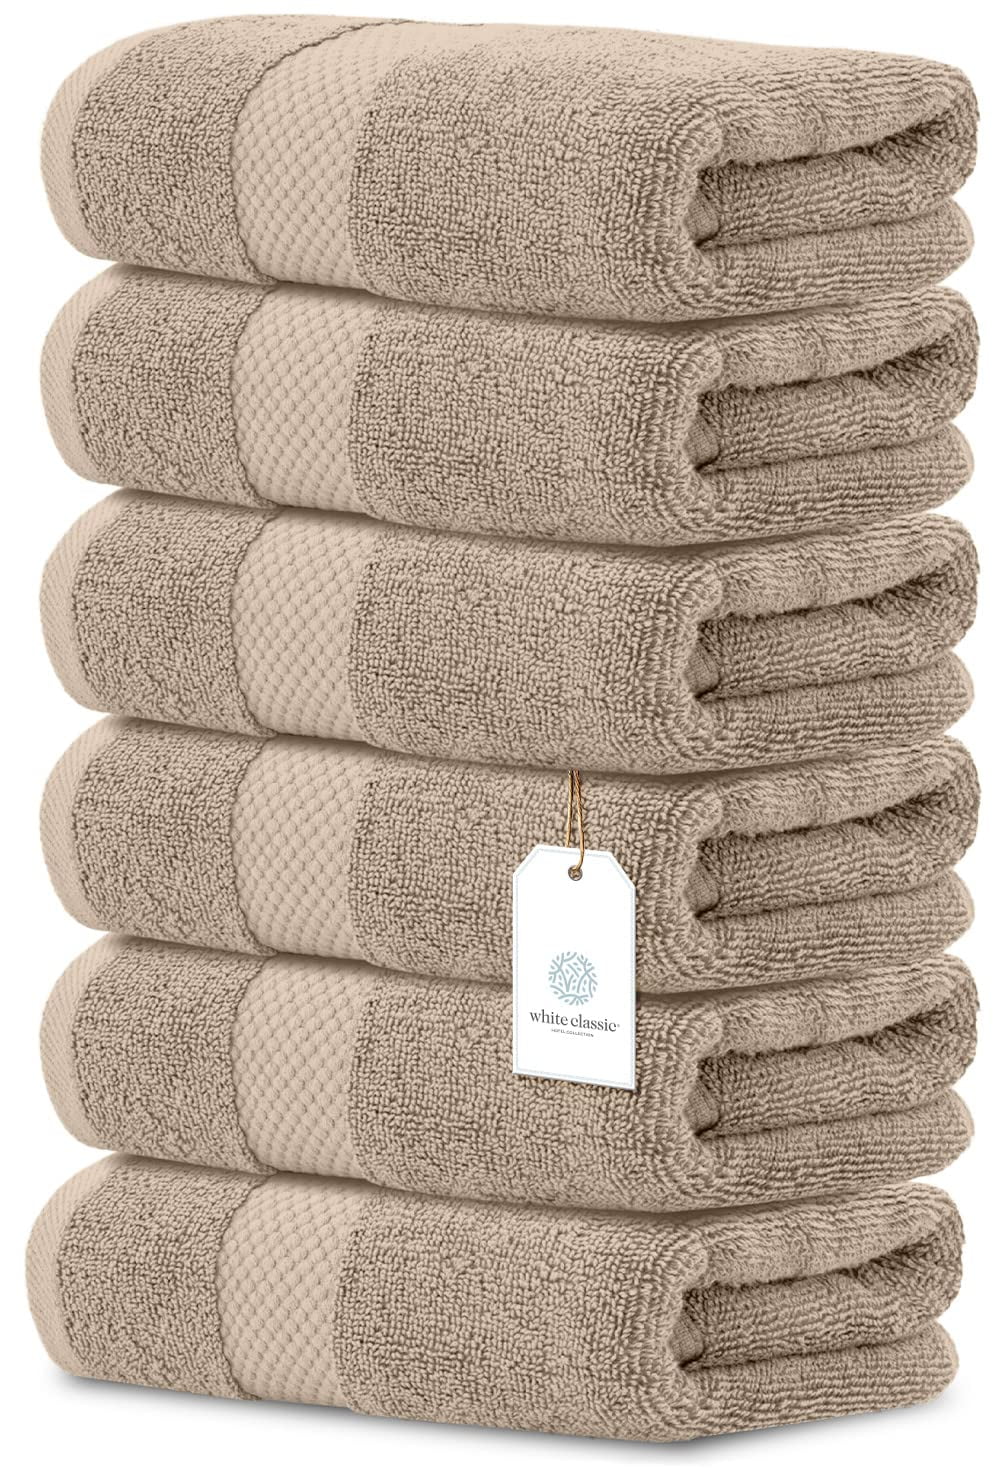 Fashion 5pcs/lot Good Quality Cheap Face Towel Small Towel Hand